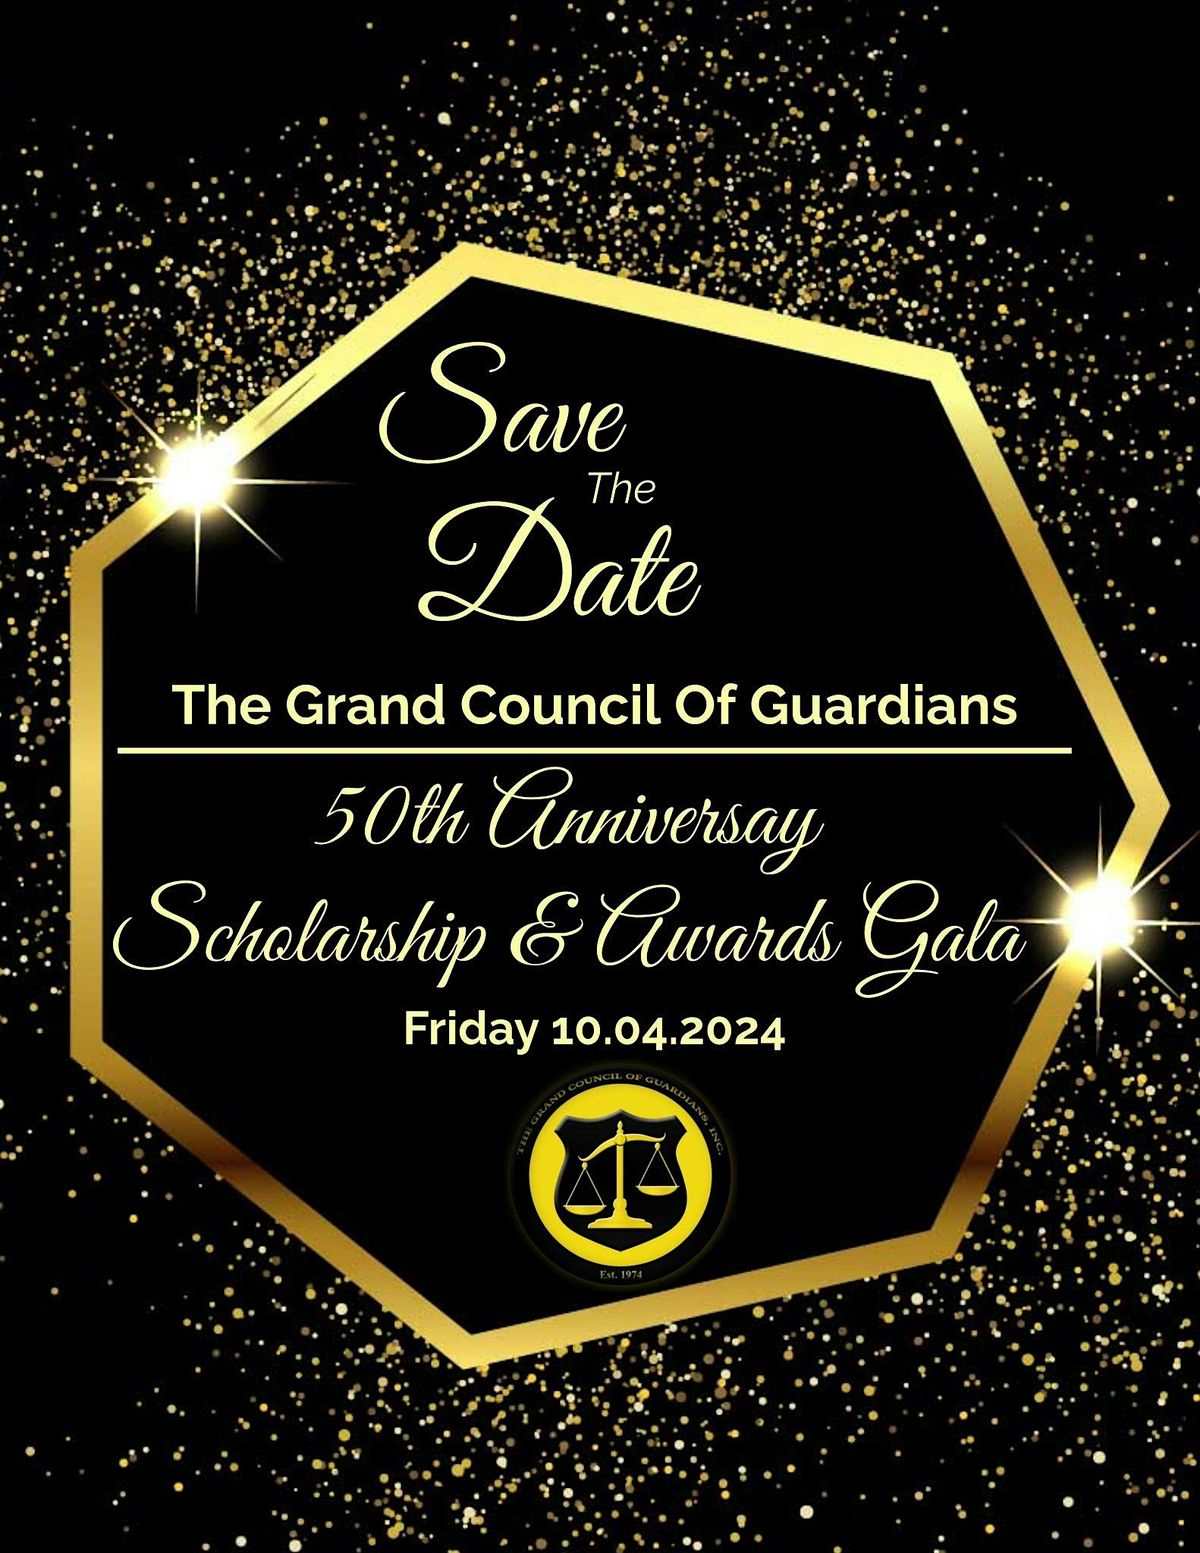 Grand Council of Guardians 50th Anniversary Scholarship & Awards Gala